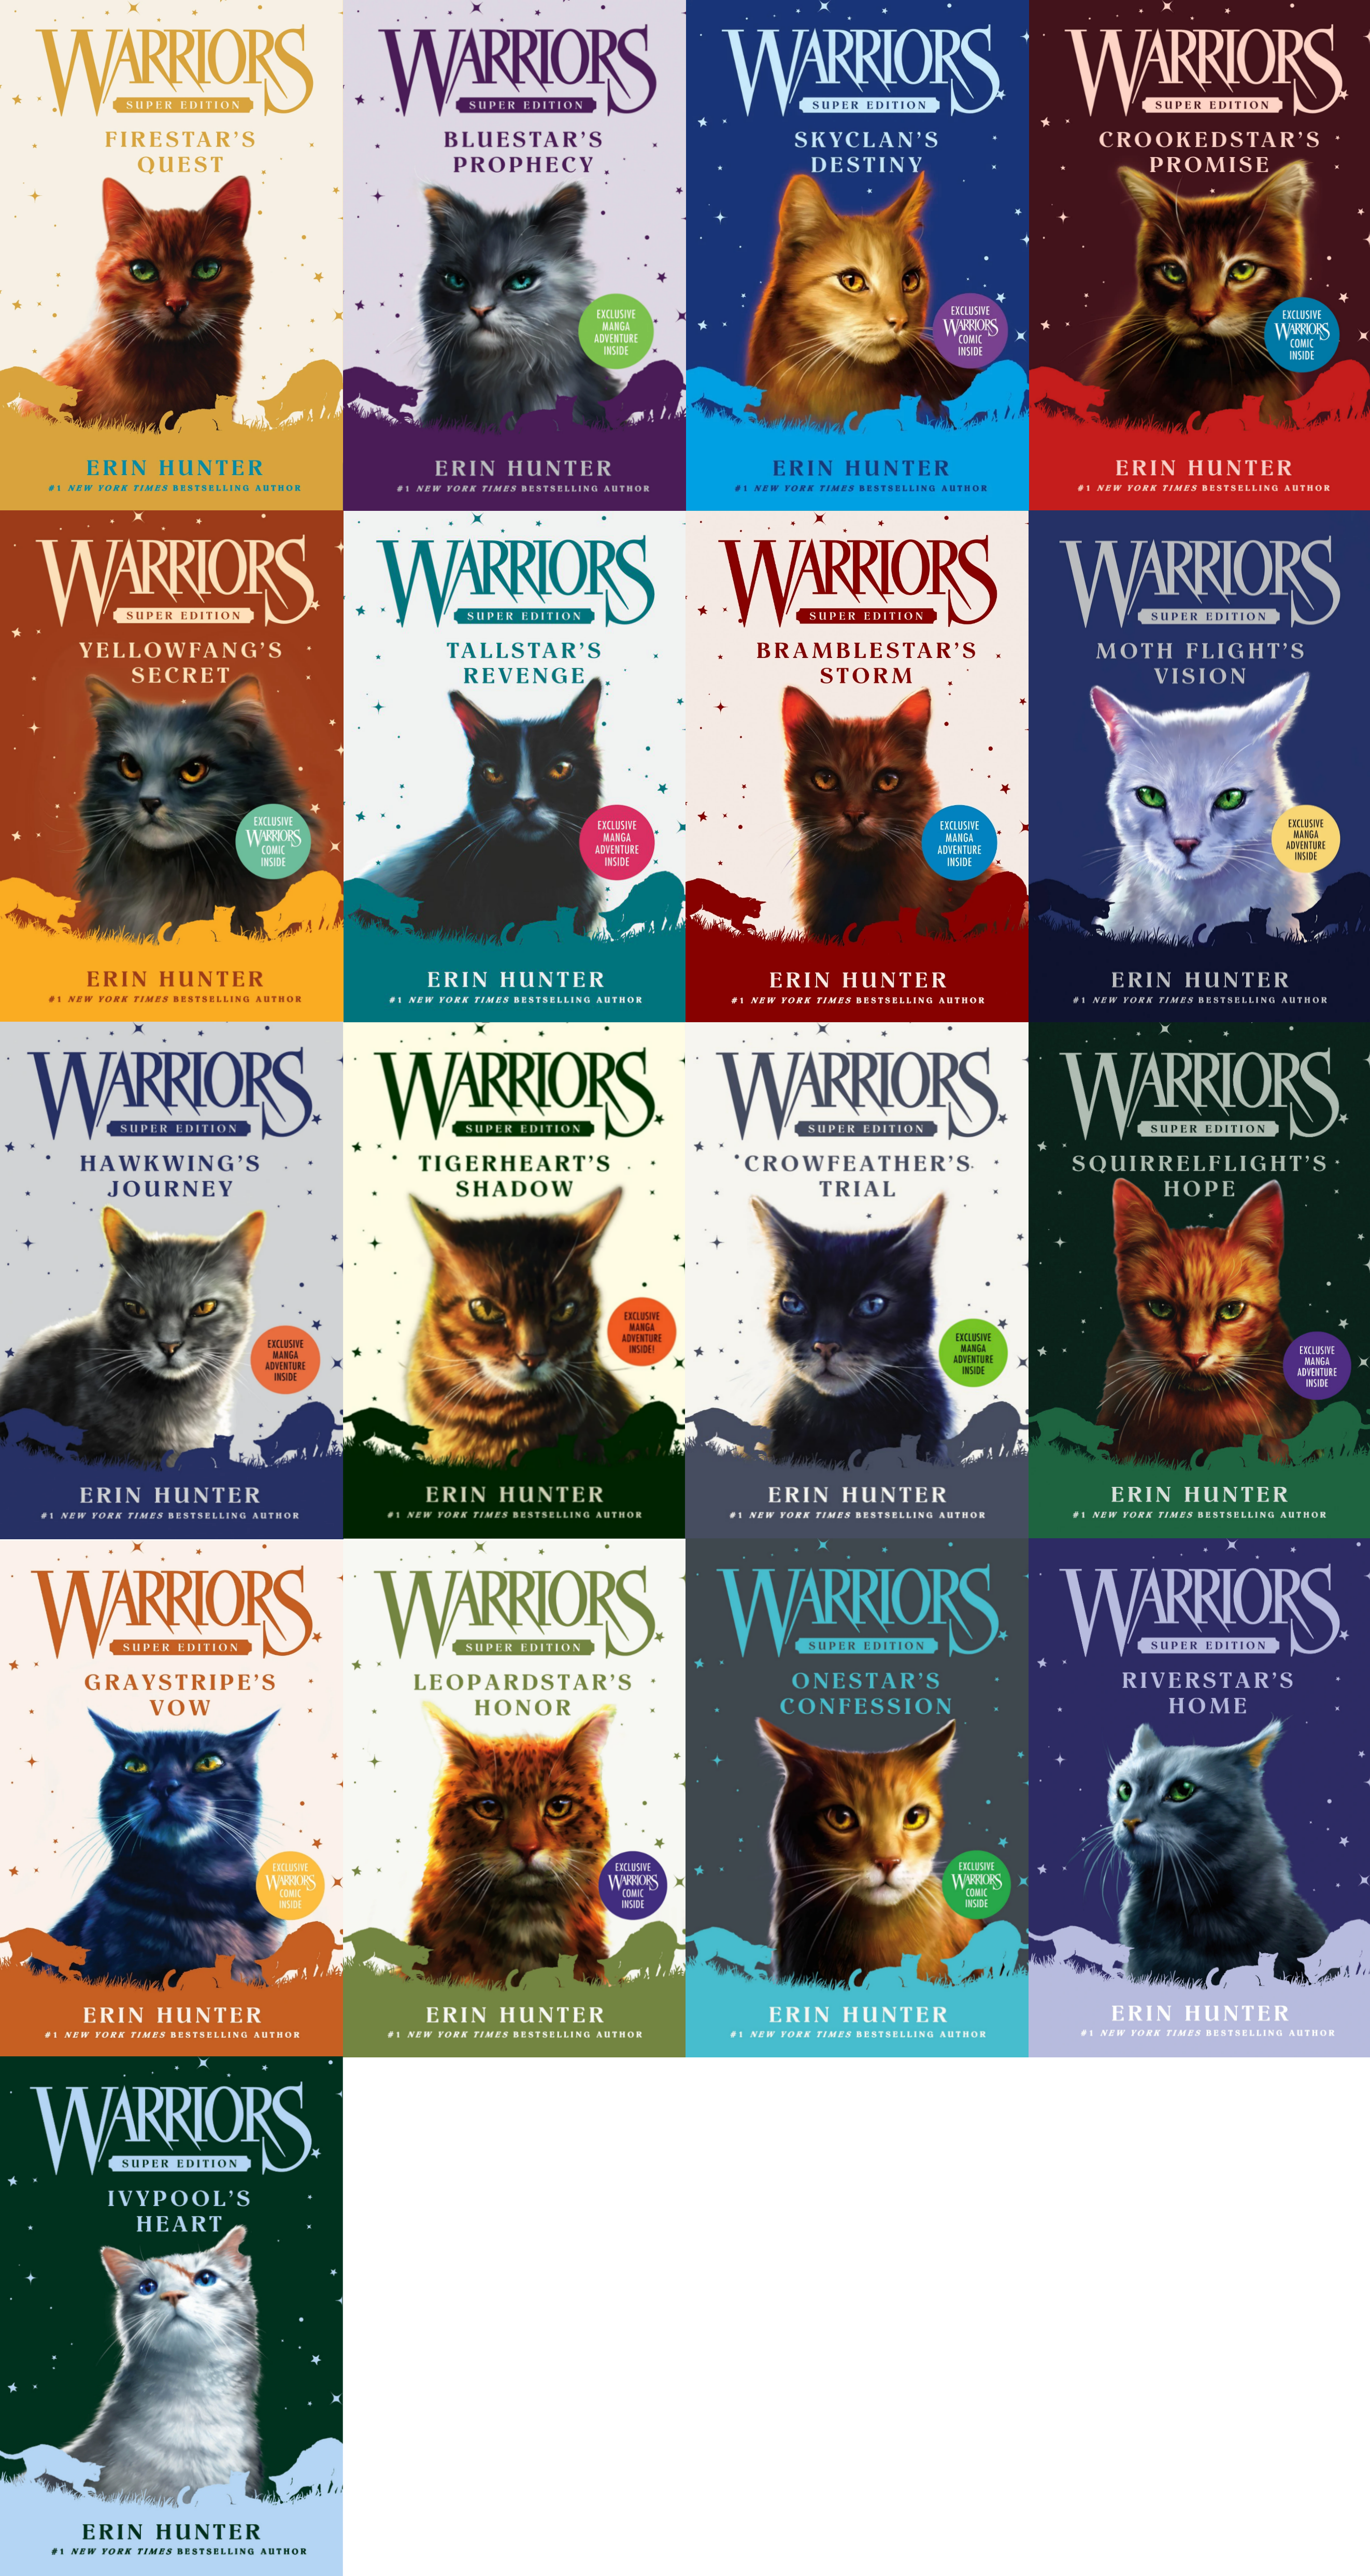 Warriors Super Edition: Crookedstar's Promise (Paperback)